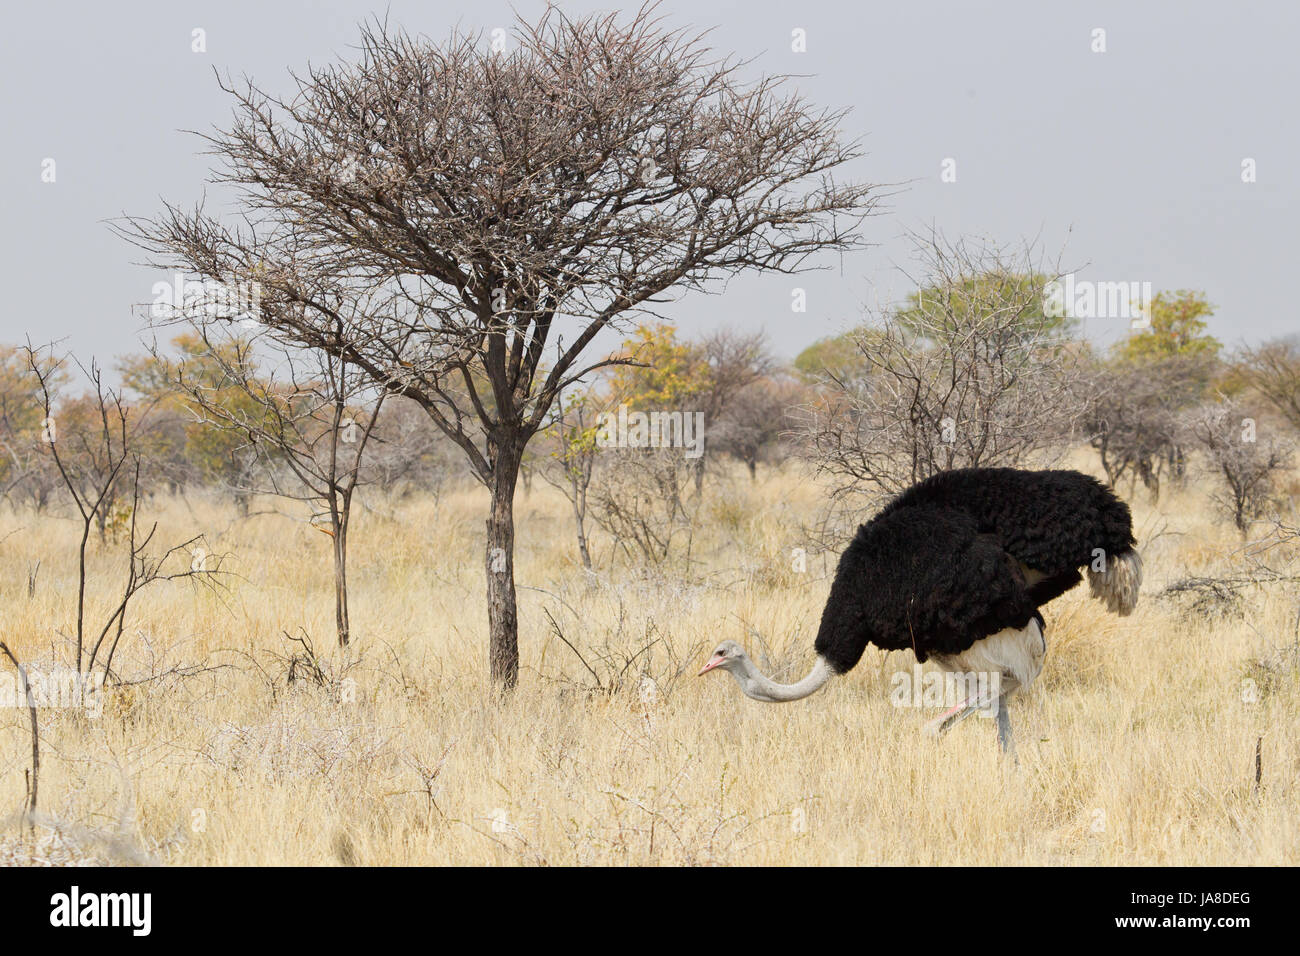 bird, africa, namibia, birds, ostrich, nosegay, bird, namibia, birds, brood, Stock Photo